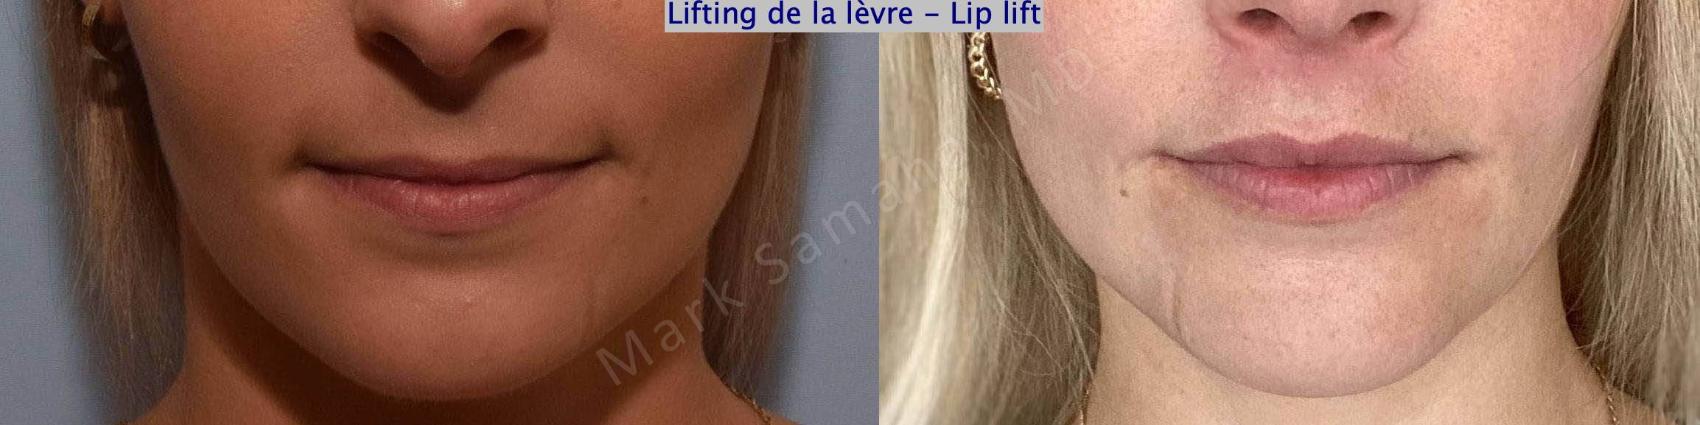 Before & After Lifting de la lèvre supérieure / Lip Lift  Case 177 Front View in Montreal, QC